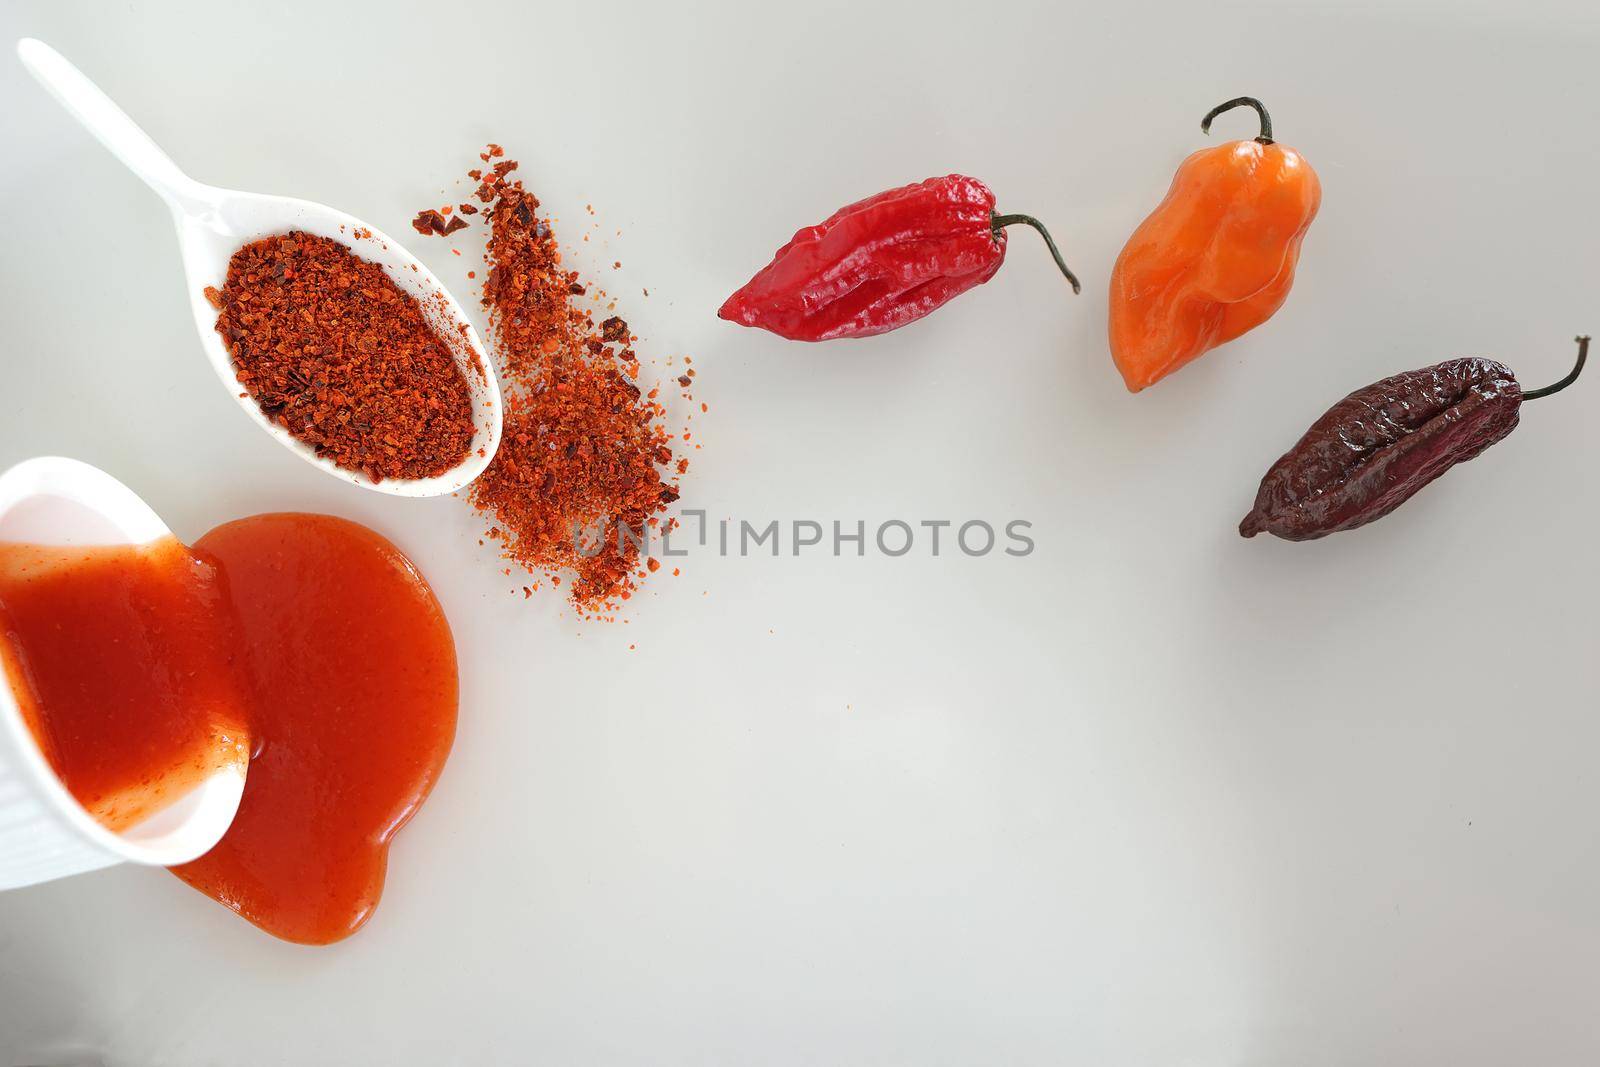 Three varieties of hot peppers Scotch bonnet, naga morich, bhut jolokiaand their derivatives - sauce and ground hot pepper on a white glass surface